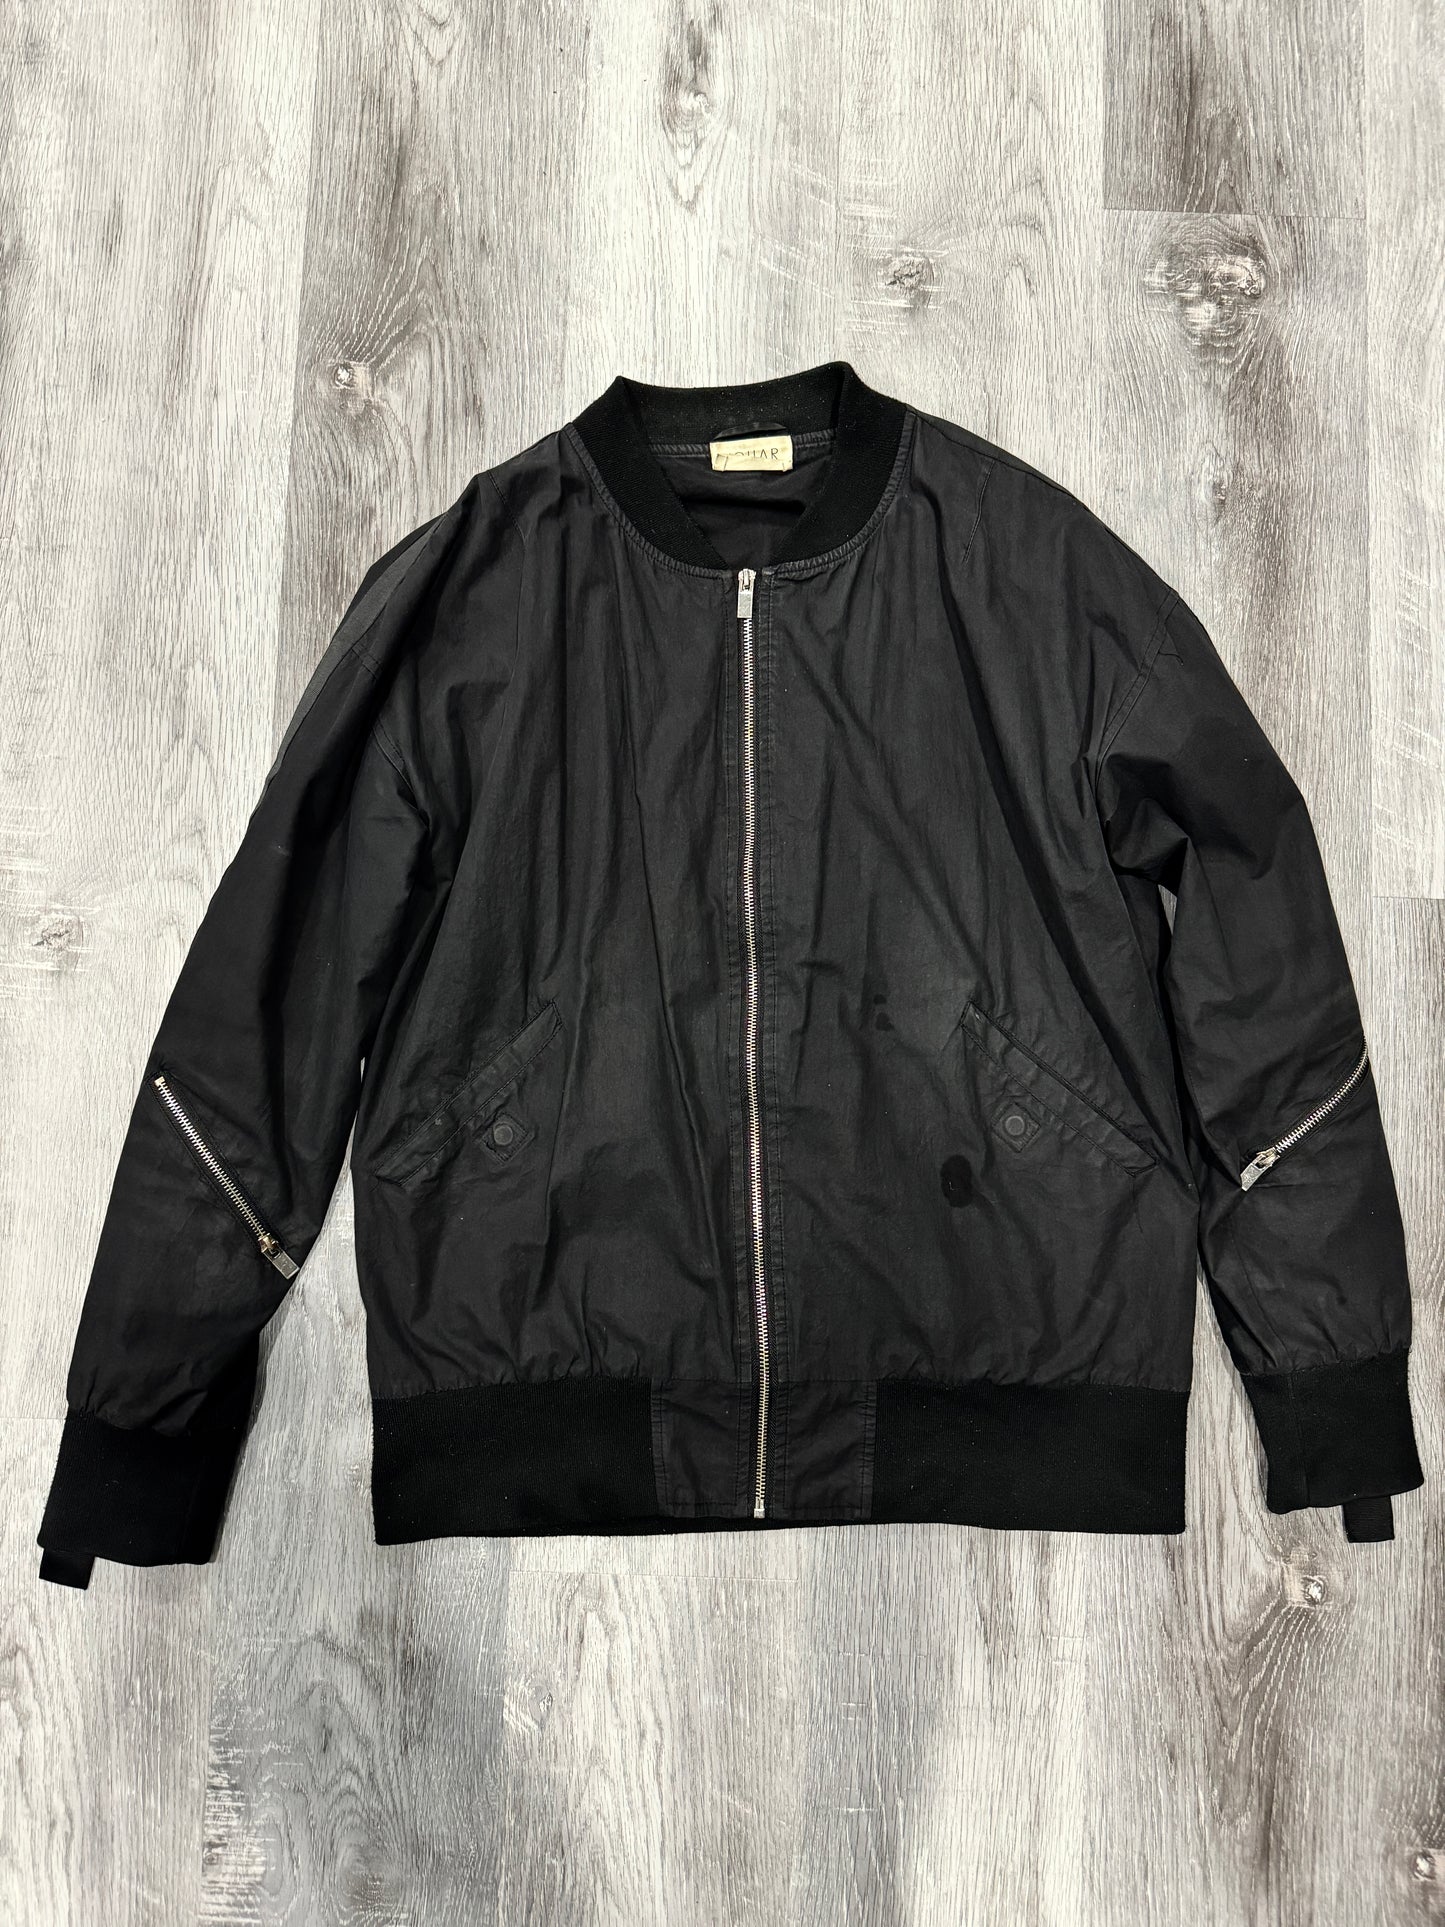 Kollar Black Designer Jacket 1 of 1 (Large) Worn by Manafest